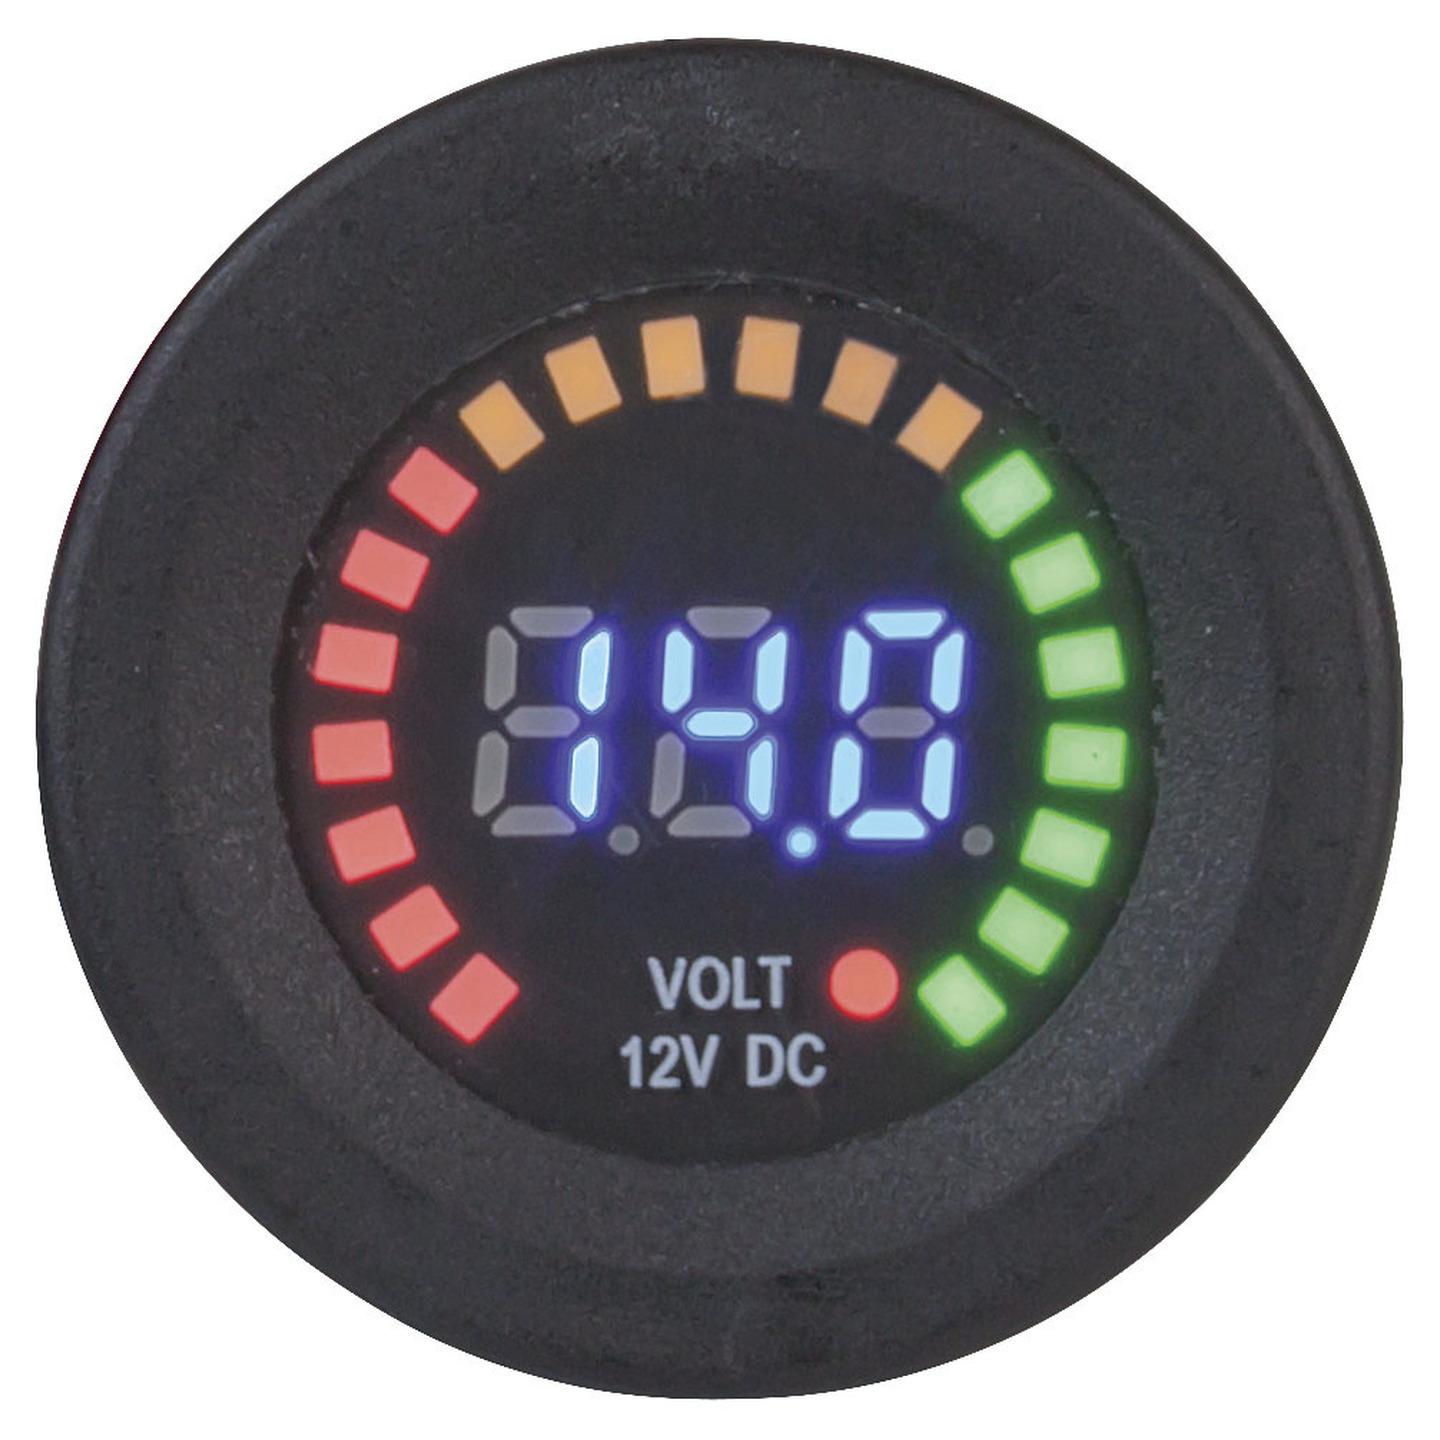 LED Voltmeter 5-15VDC with Bar Graph